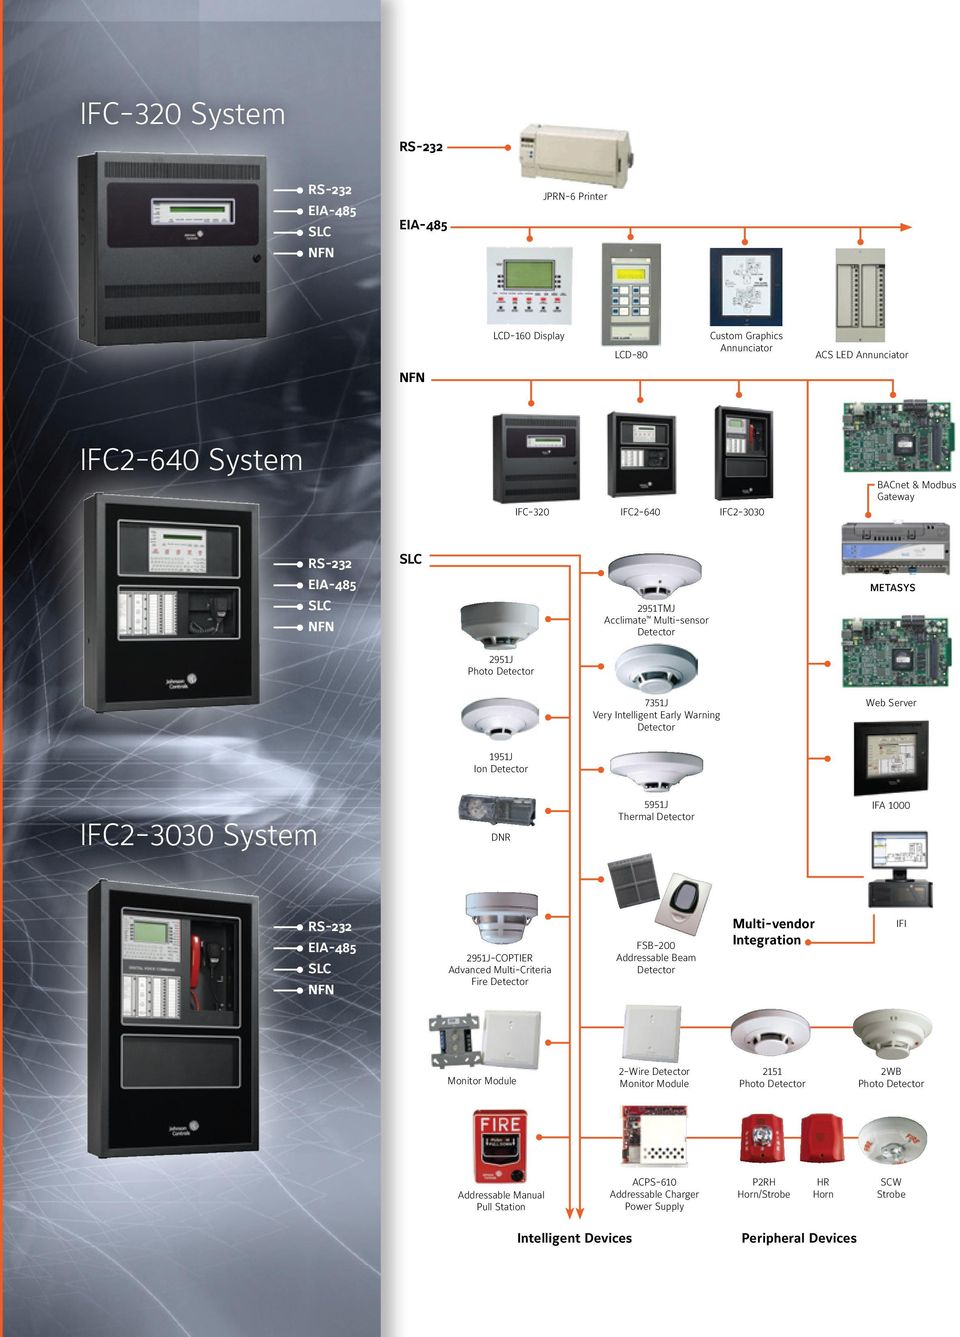 System DNR 5951J Thermal Detector IFA 1000 RS-232 EIA-485 SLC NFN 2951J-COPTIER Advanced Multi-Criteria Fire Detector FSB-200 Addressable Beam Detector Multi-vendor Integration IFI Monitor Module